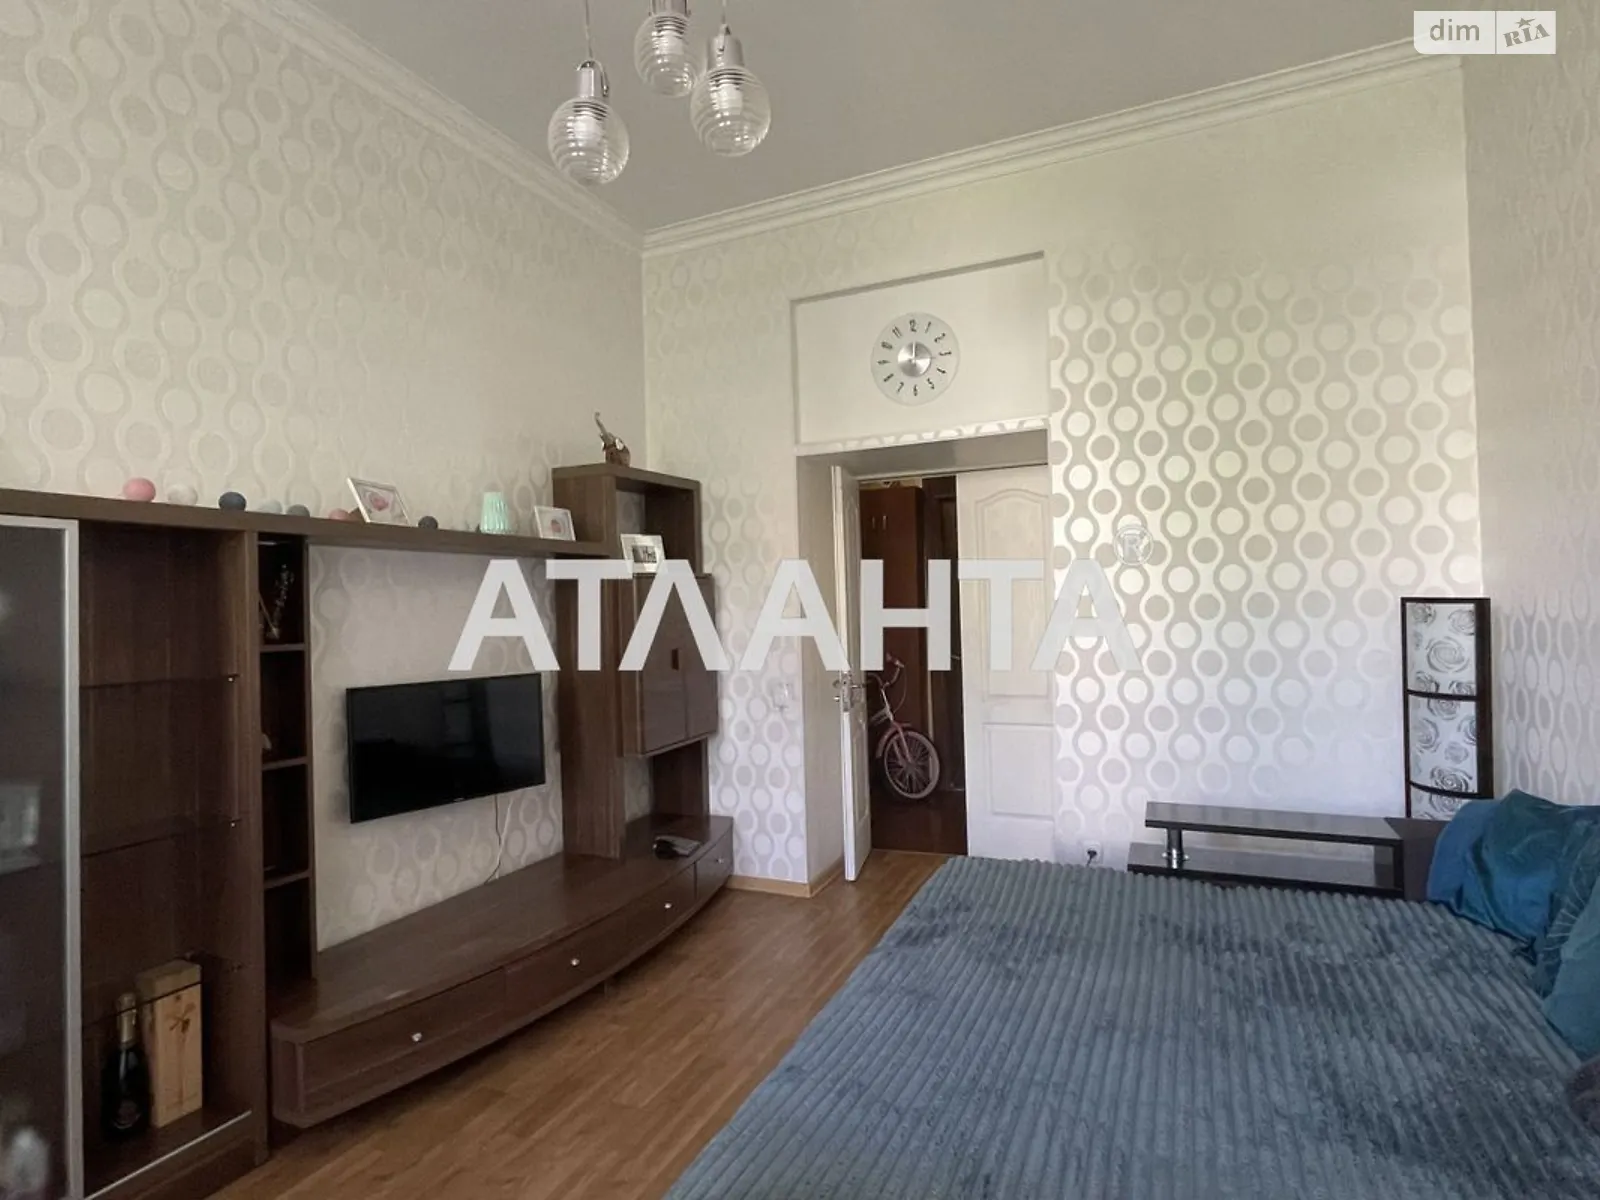 Продается комната 53 кв. м в Одессе, цена: 30000 $ - фото 1